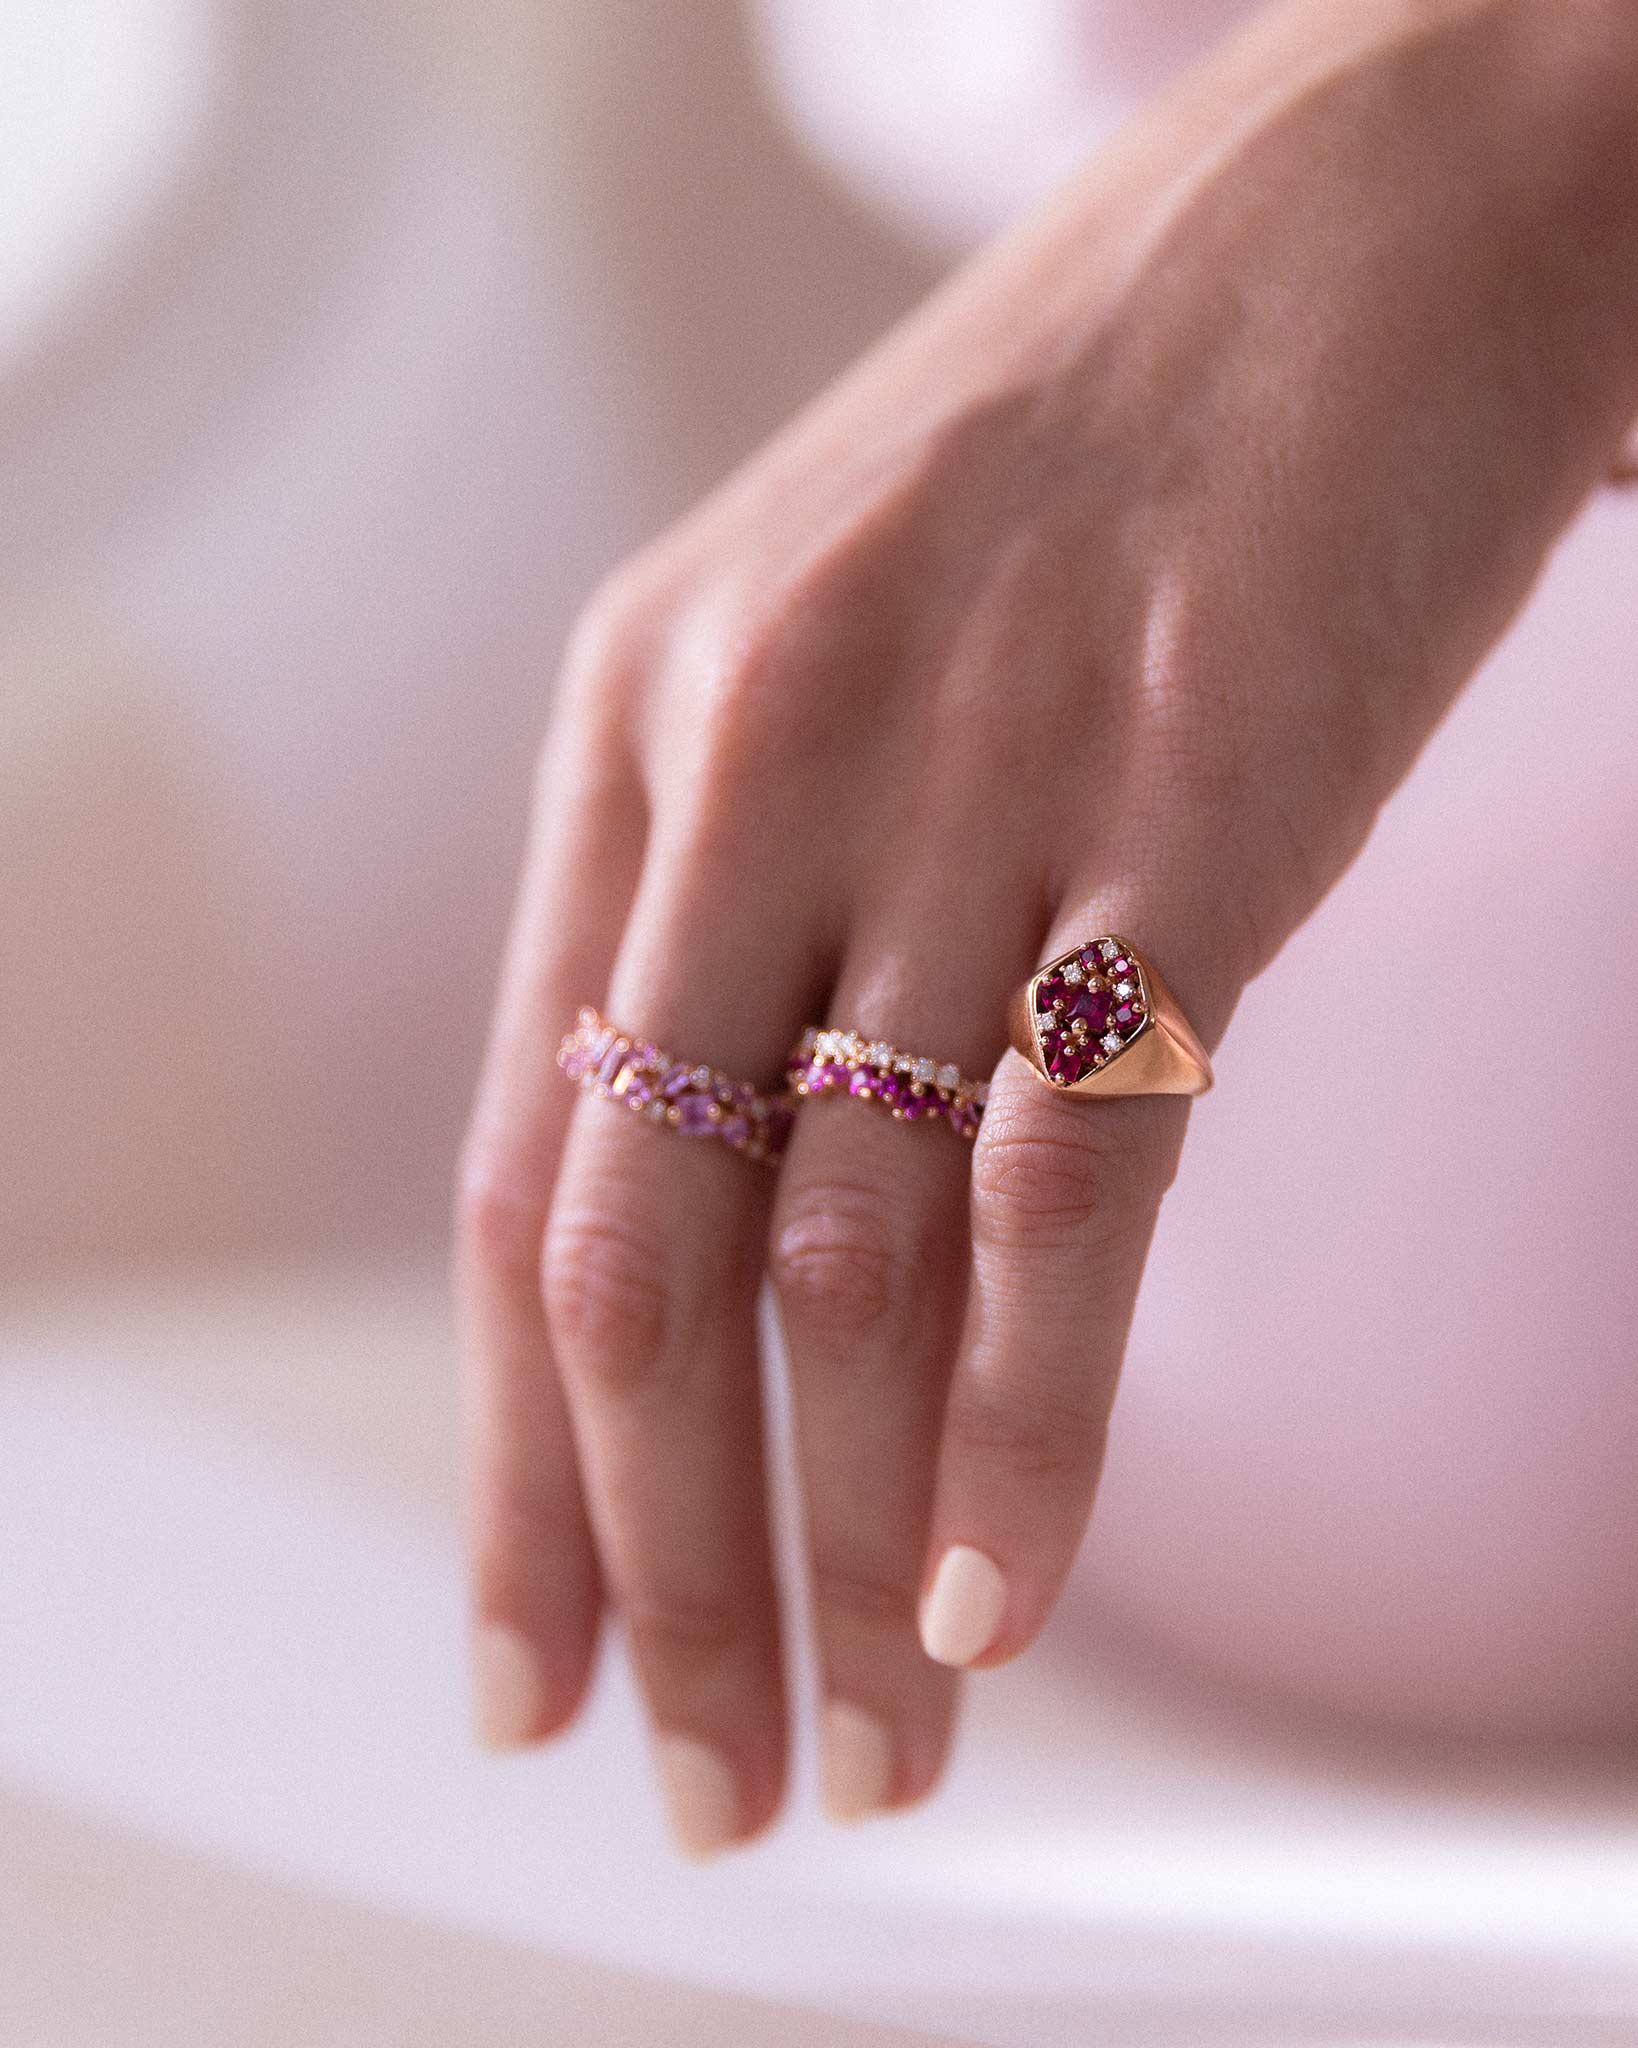 Suzanne Kalan La Fantaisie Star Ruby Signet Ring in 18k rose gold